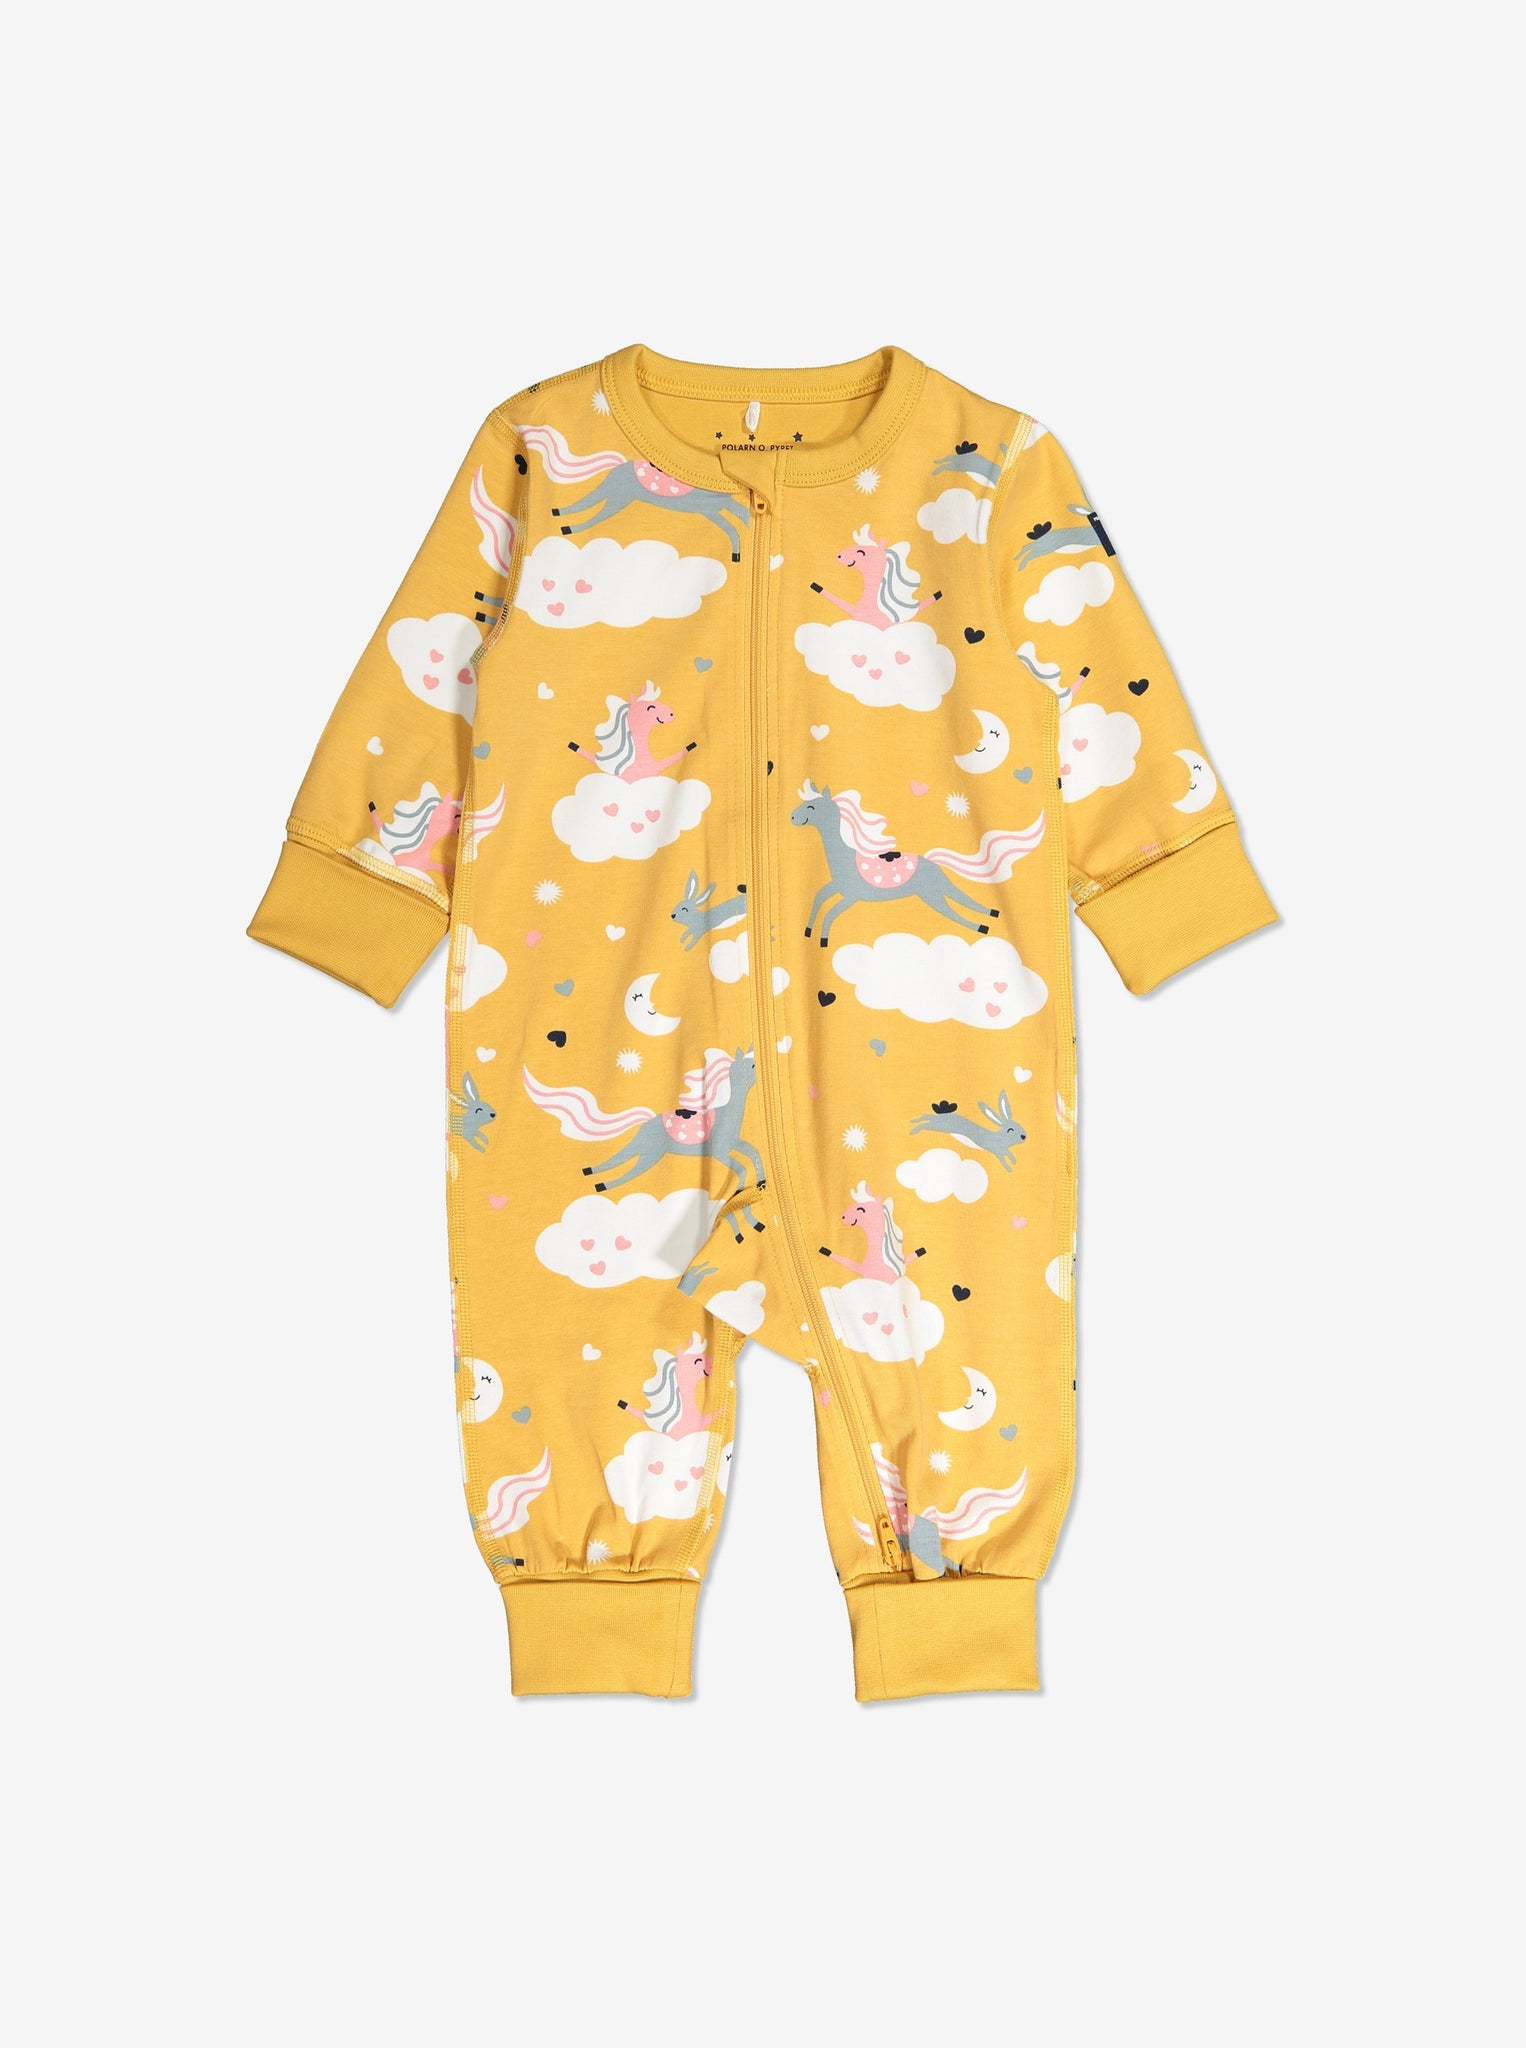 Cute Organic Baby Sleepsuits, Scandinavian Baby Clothes 